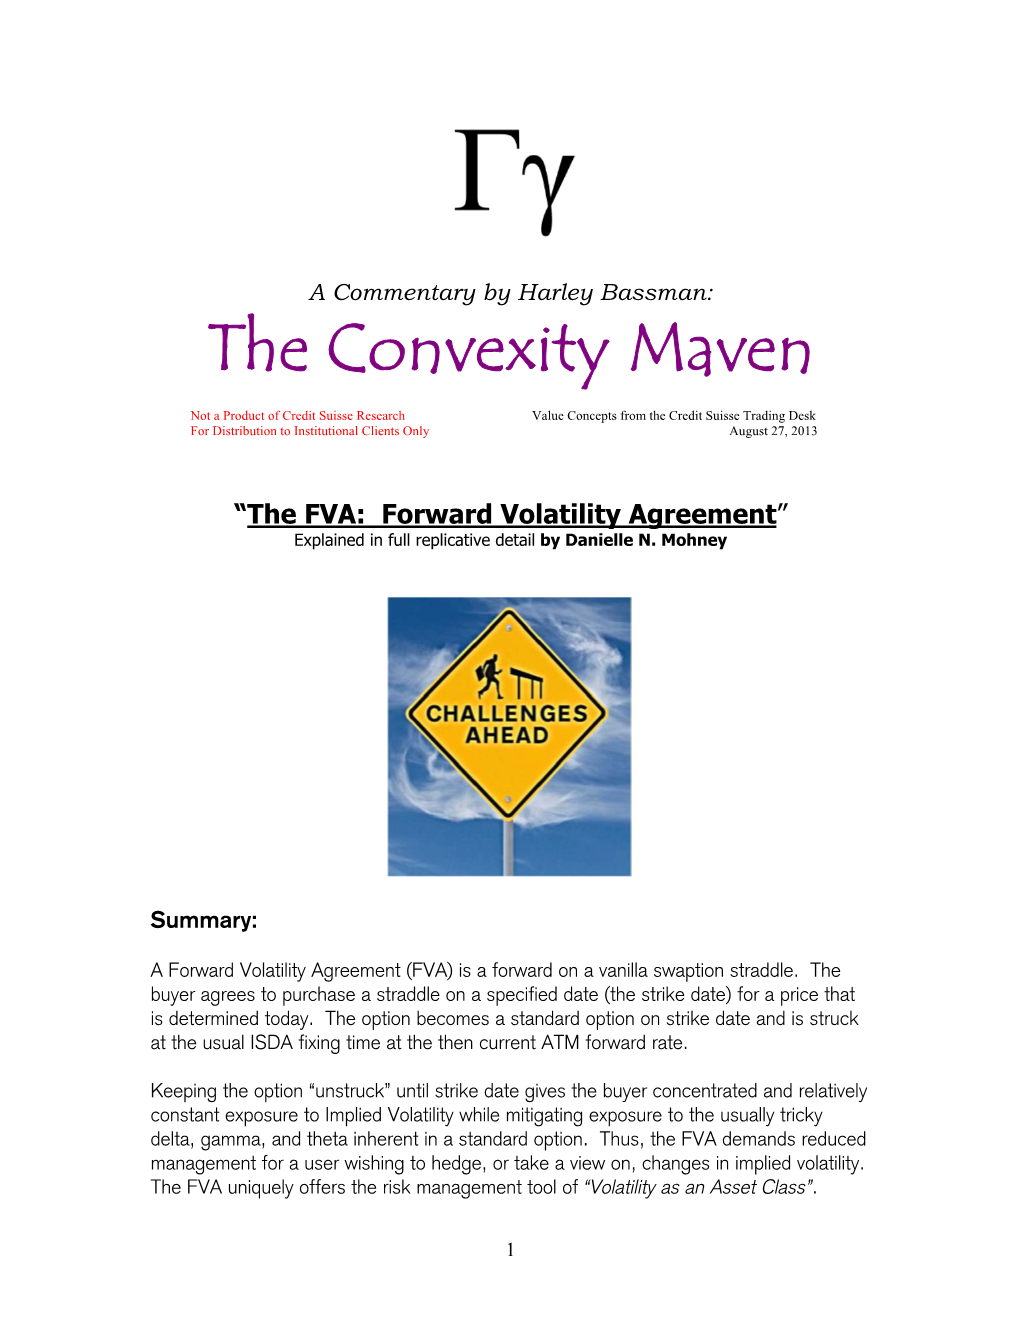 The FVA – Forward Volatility Agreement